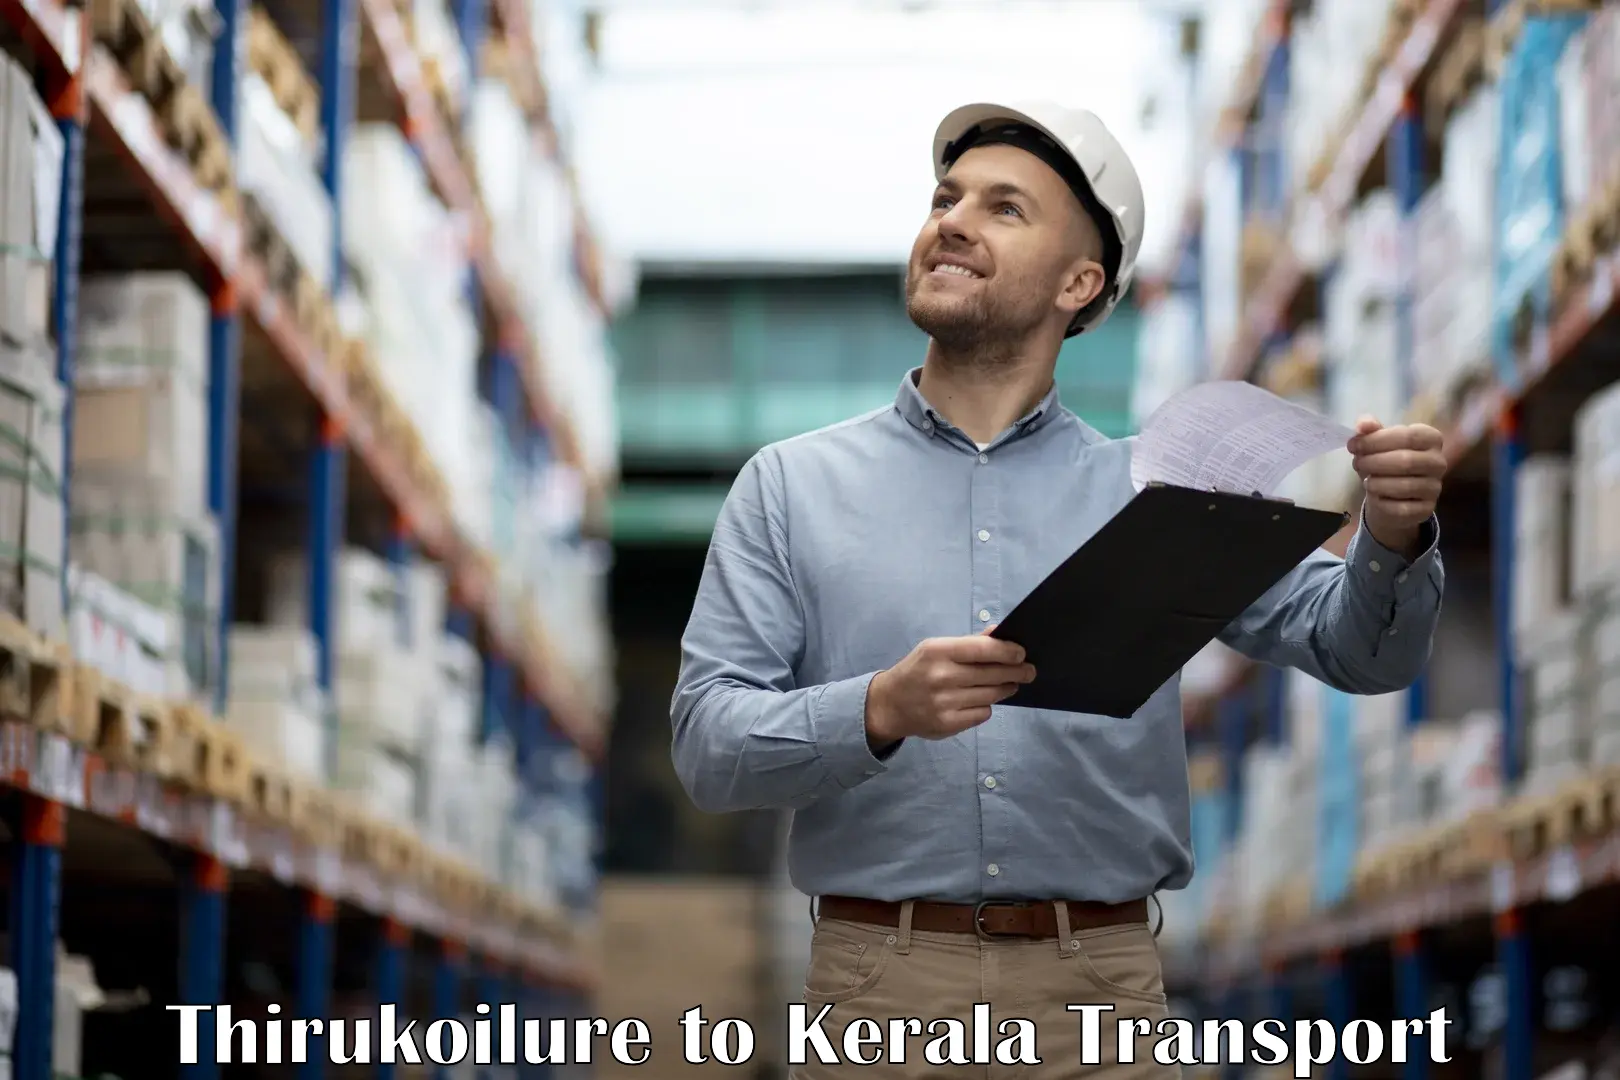 Furniture transport service Thirukoilure to Kerala